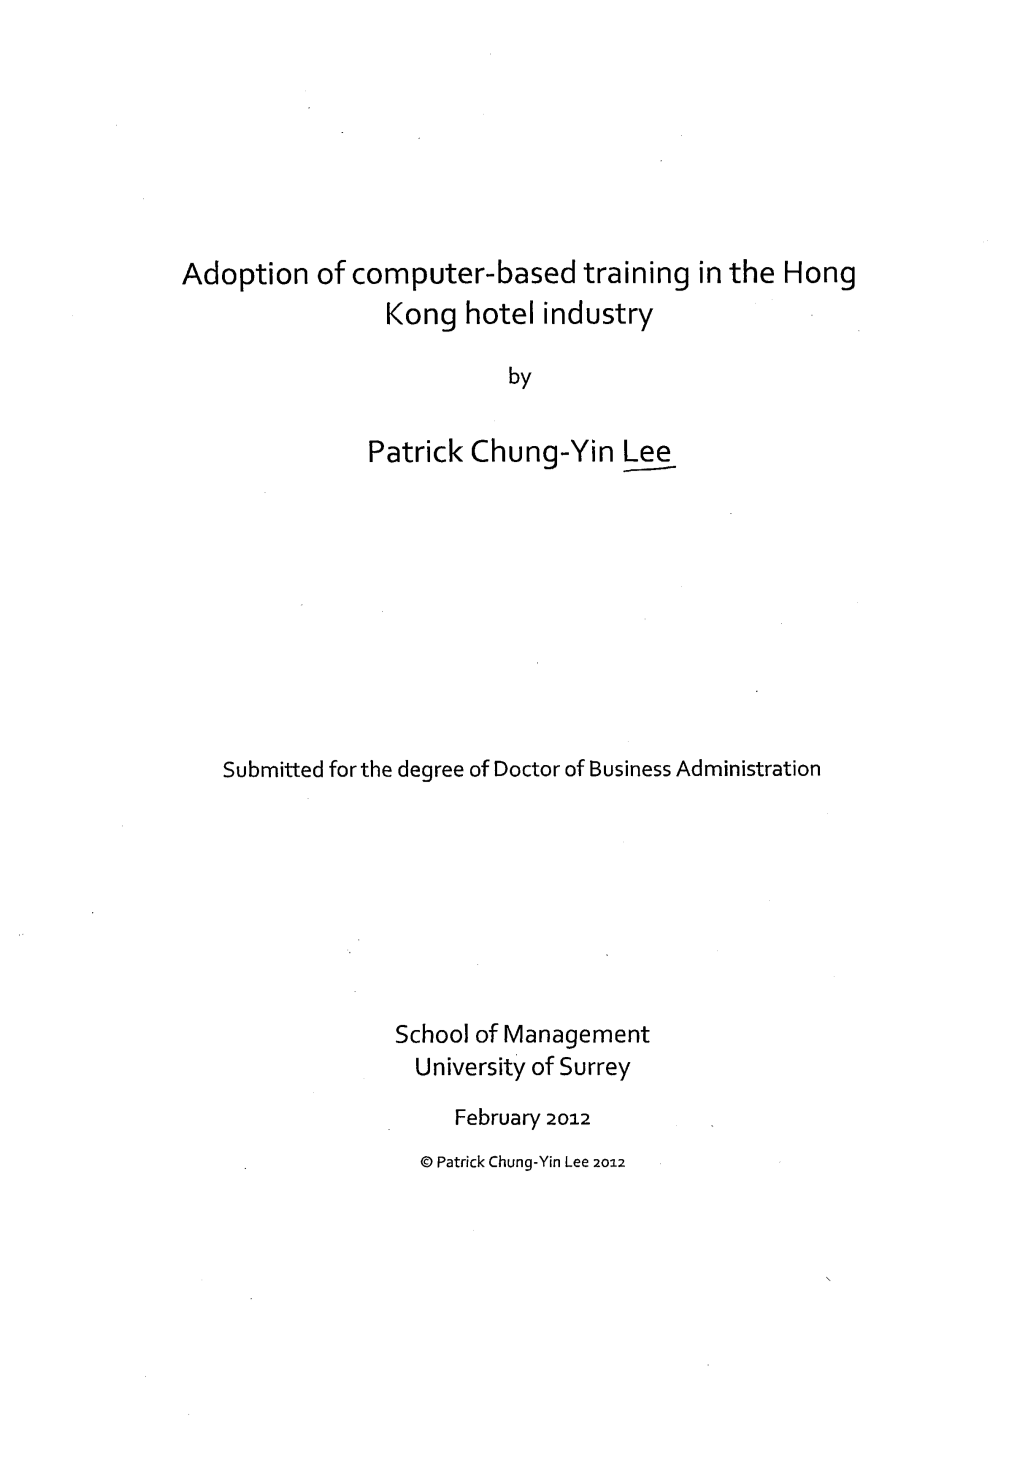 Adoption of Computer-Based Training in the Hong Kong Hotel Industry Patrick Chung-Yin